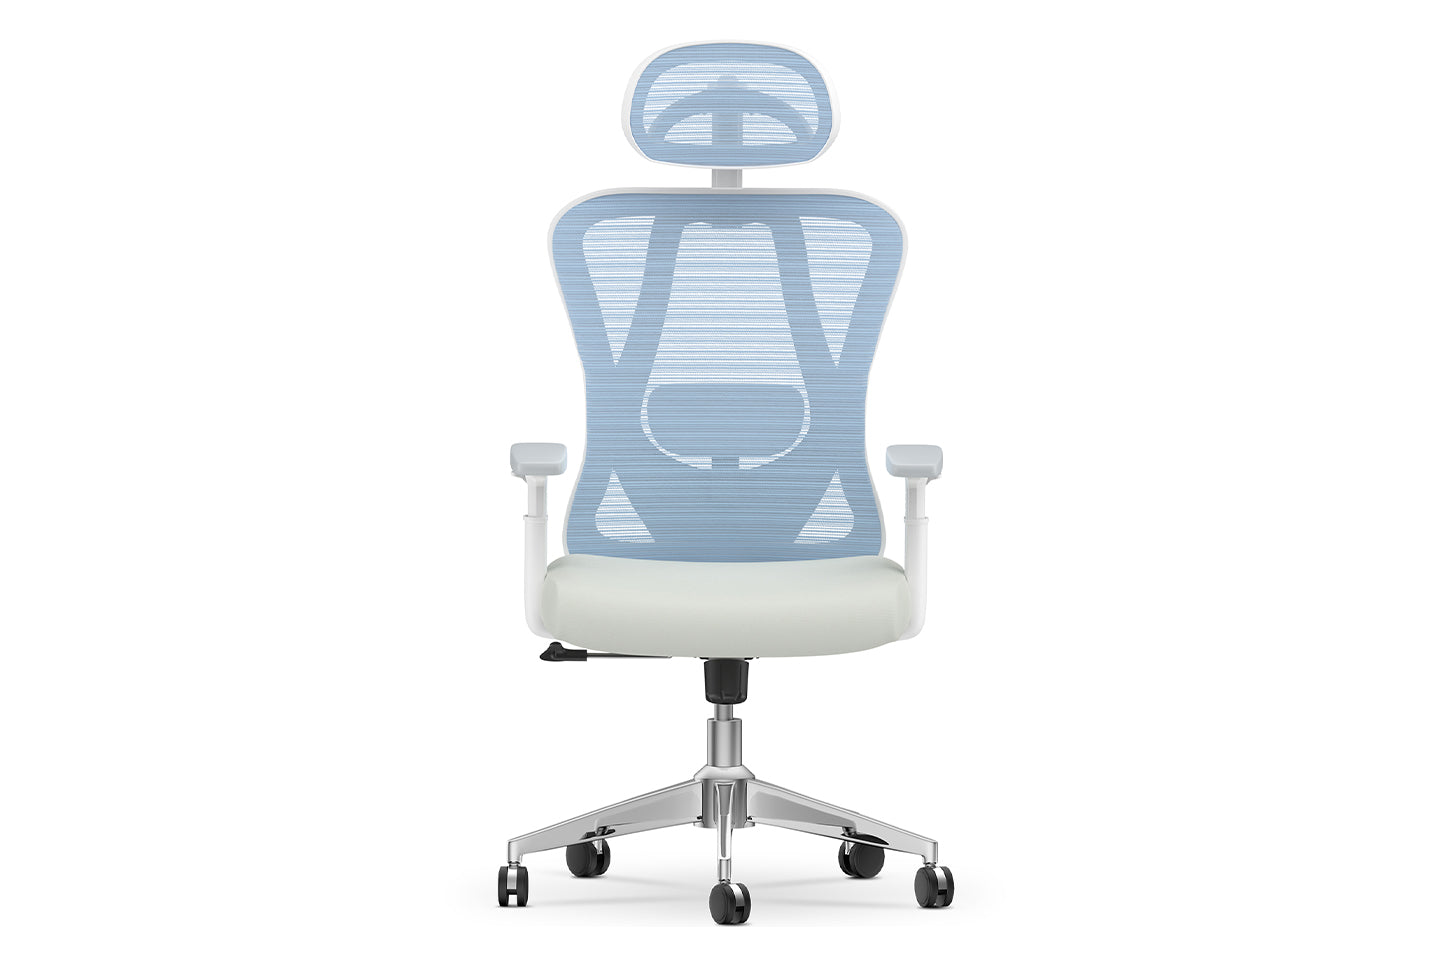 Ergonomic Mesh Office Chair High Back Home Office Desk Chair with Adjustable Headrest, Armrests, Lumbar Support Blue